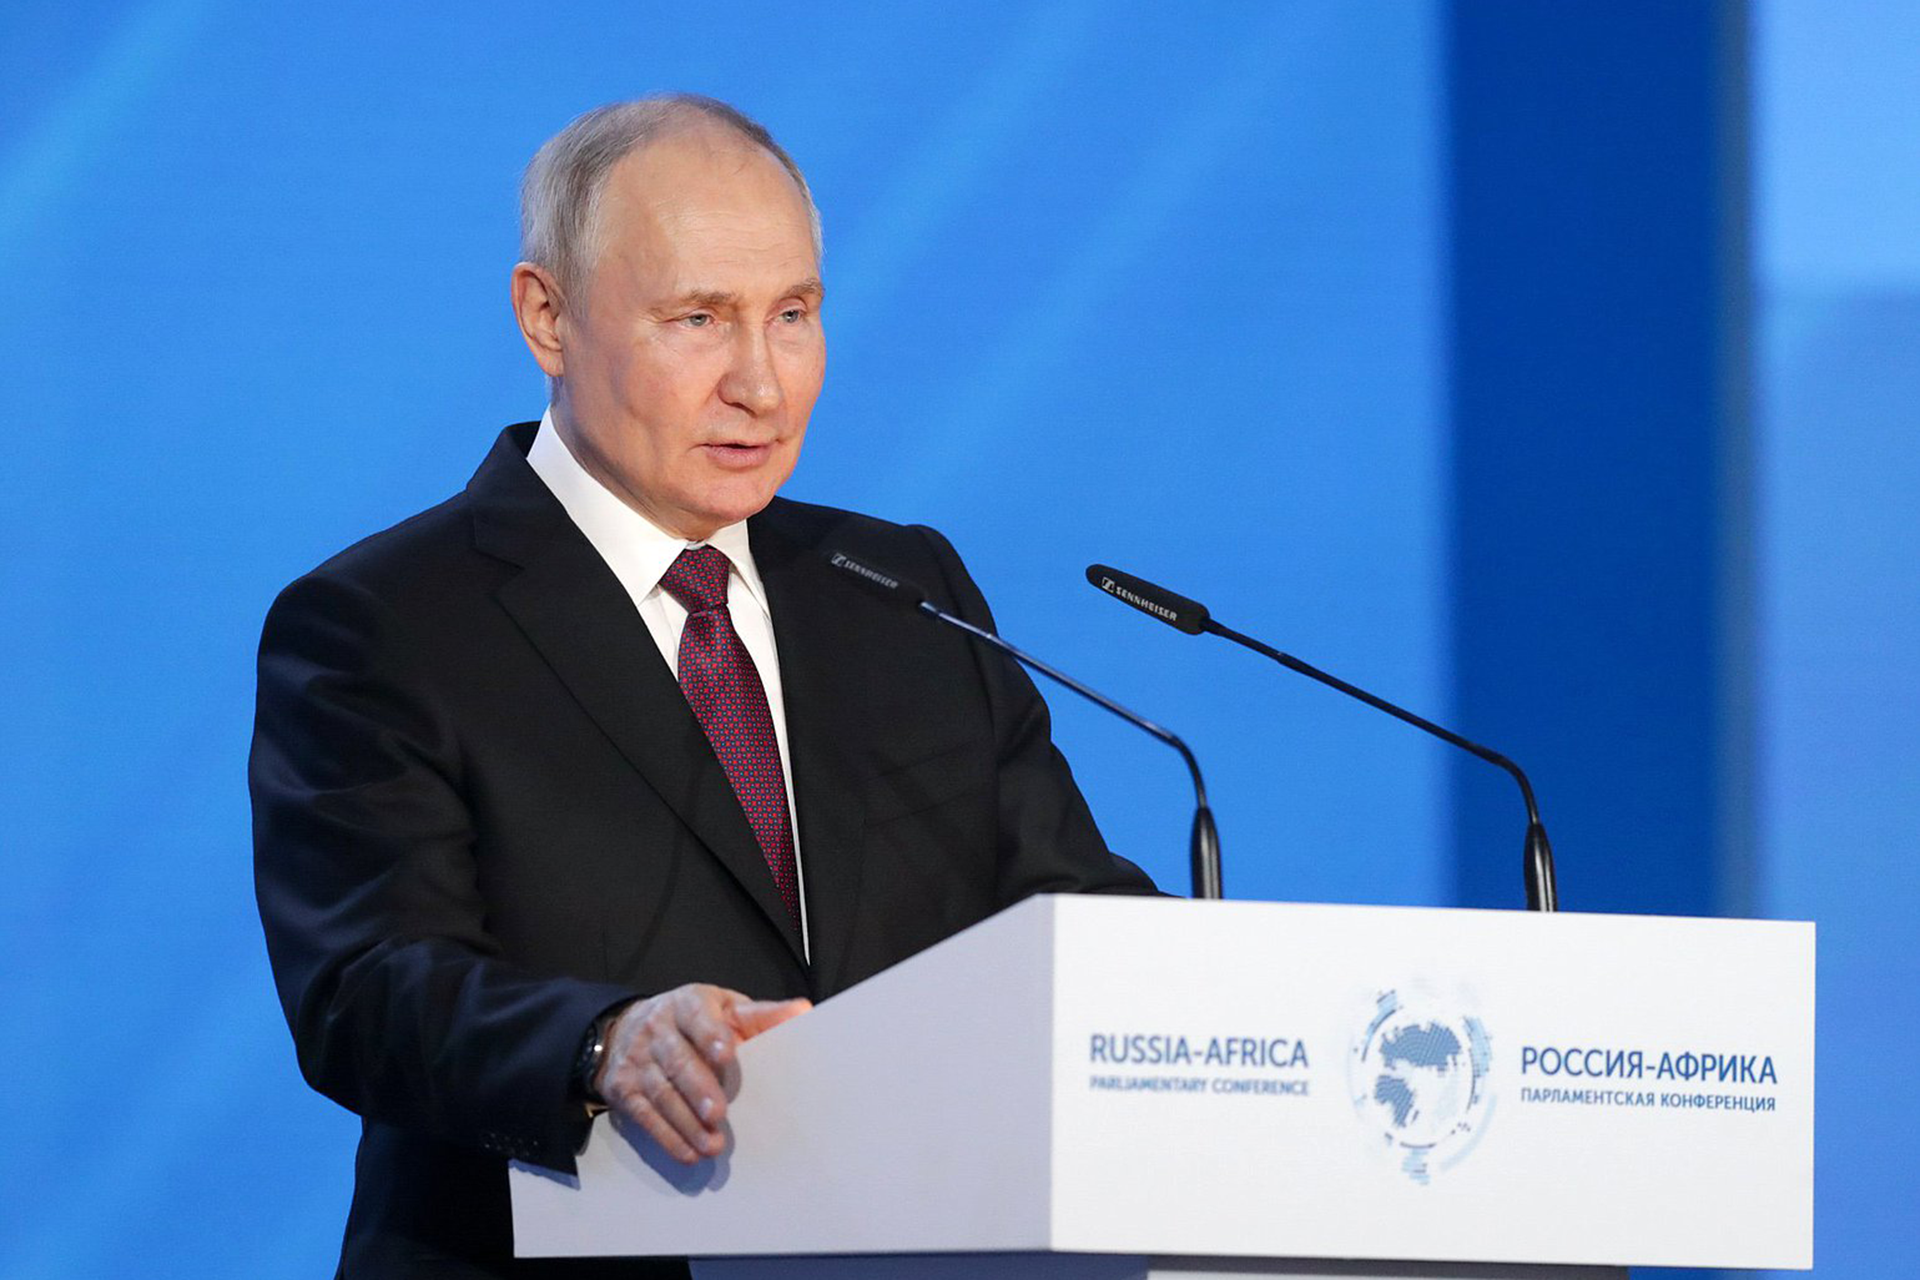 Duma.gov.ru, Putin spoke at the International Parliamentary Conference Russia – Africa in a Multipolar World, 20 March 2023. CC BY 4.0, via Wikimedia Commons (Bildgröße geändert)